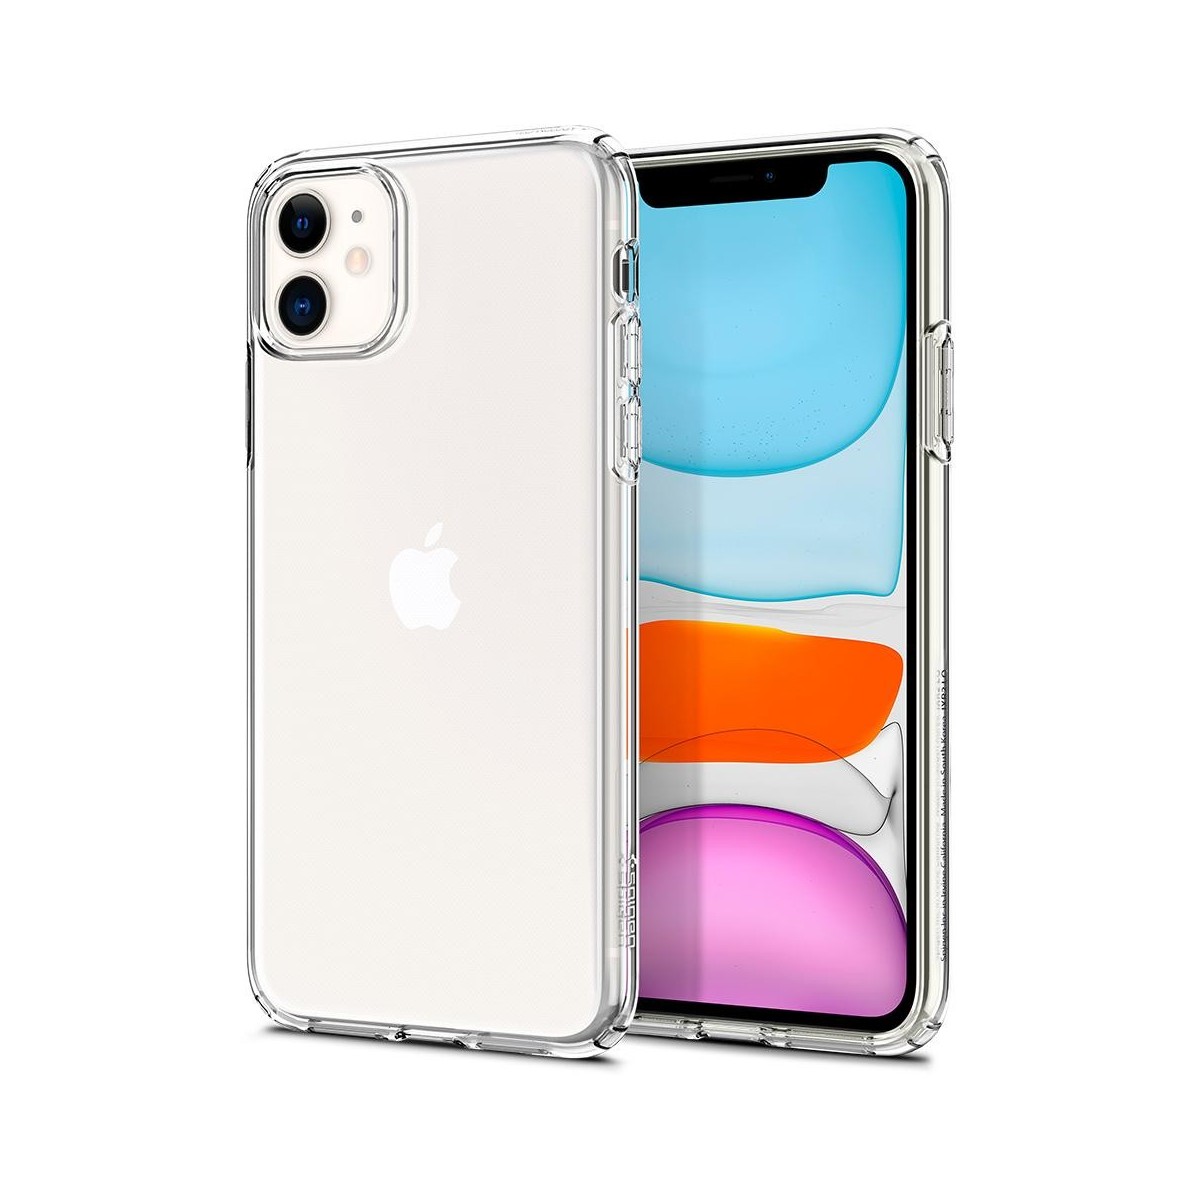 Coque compatible iPhone 11 Liquid Crystal transparente - Spigen